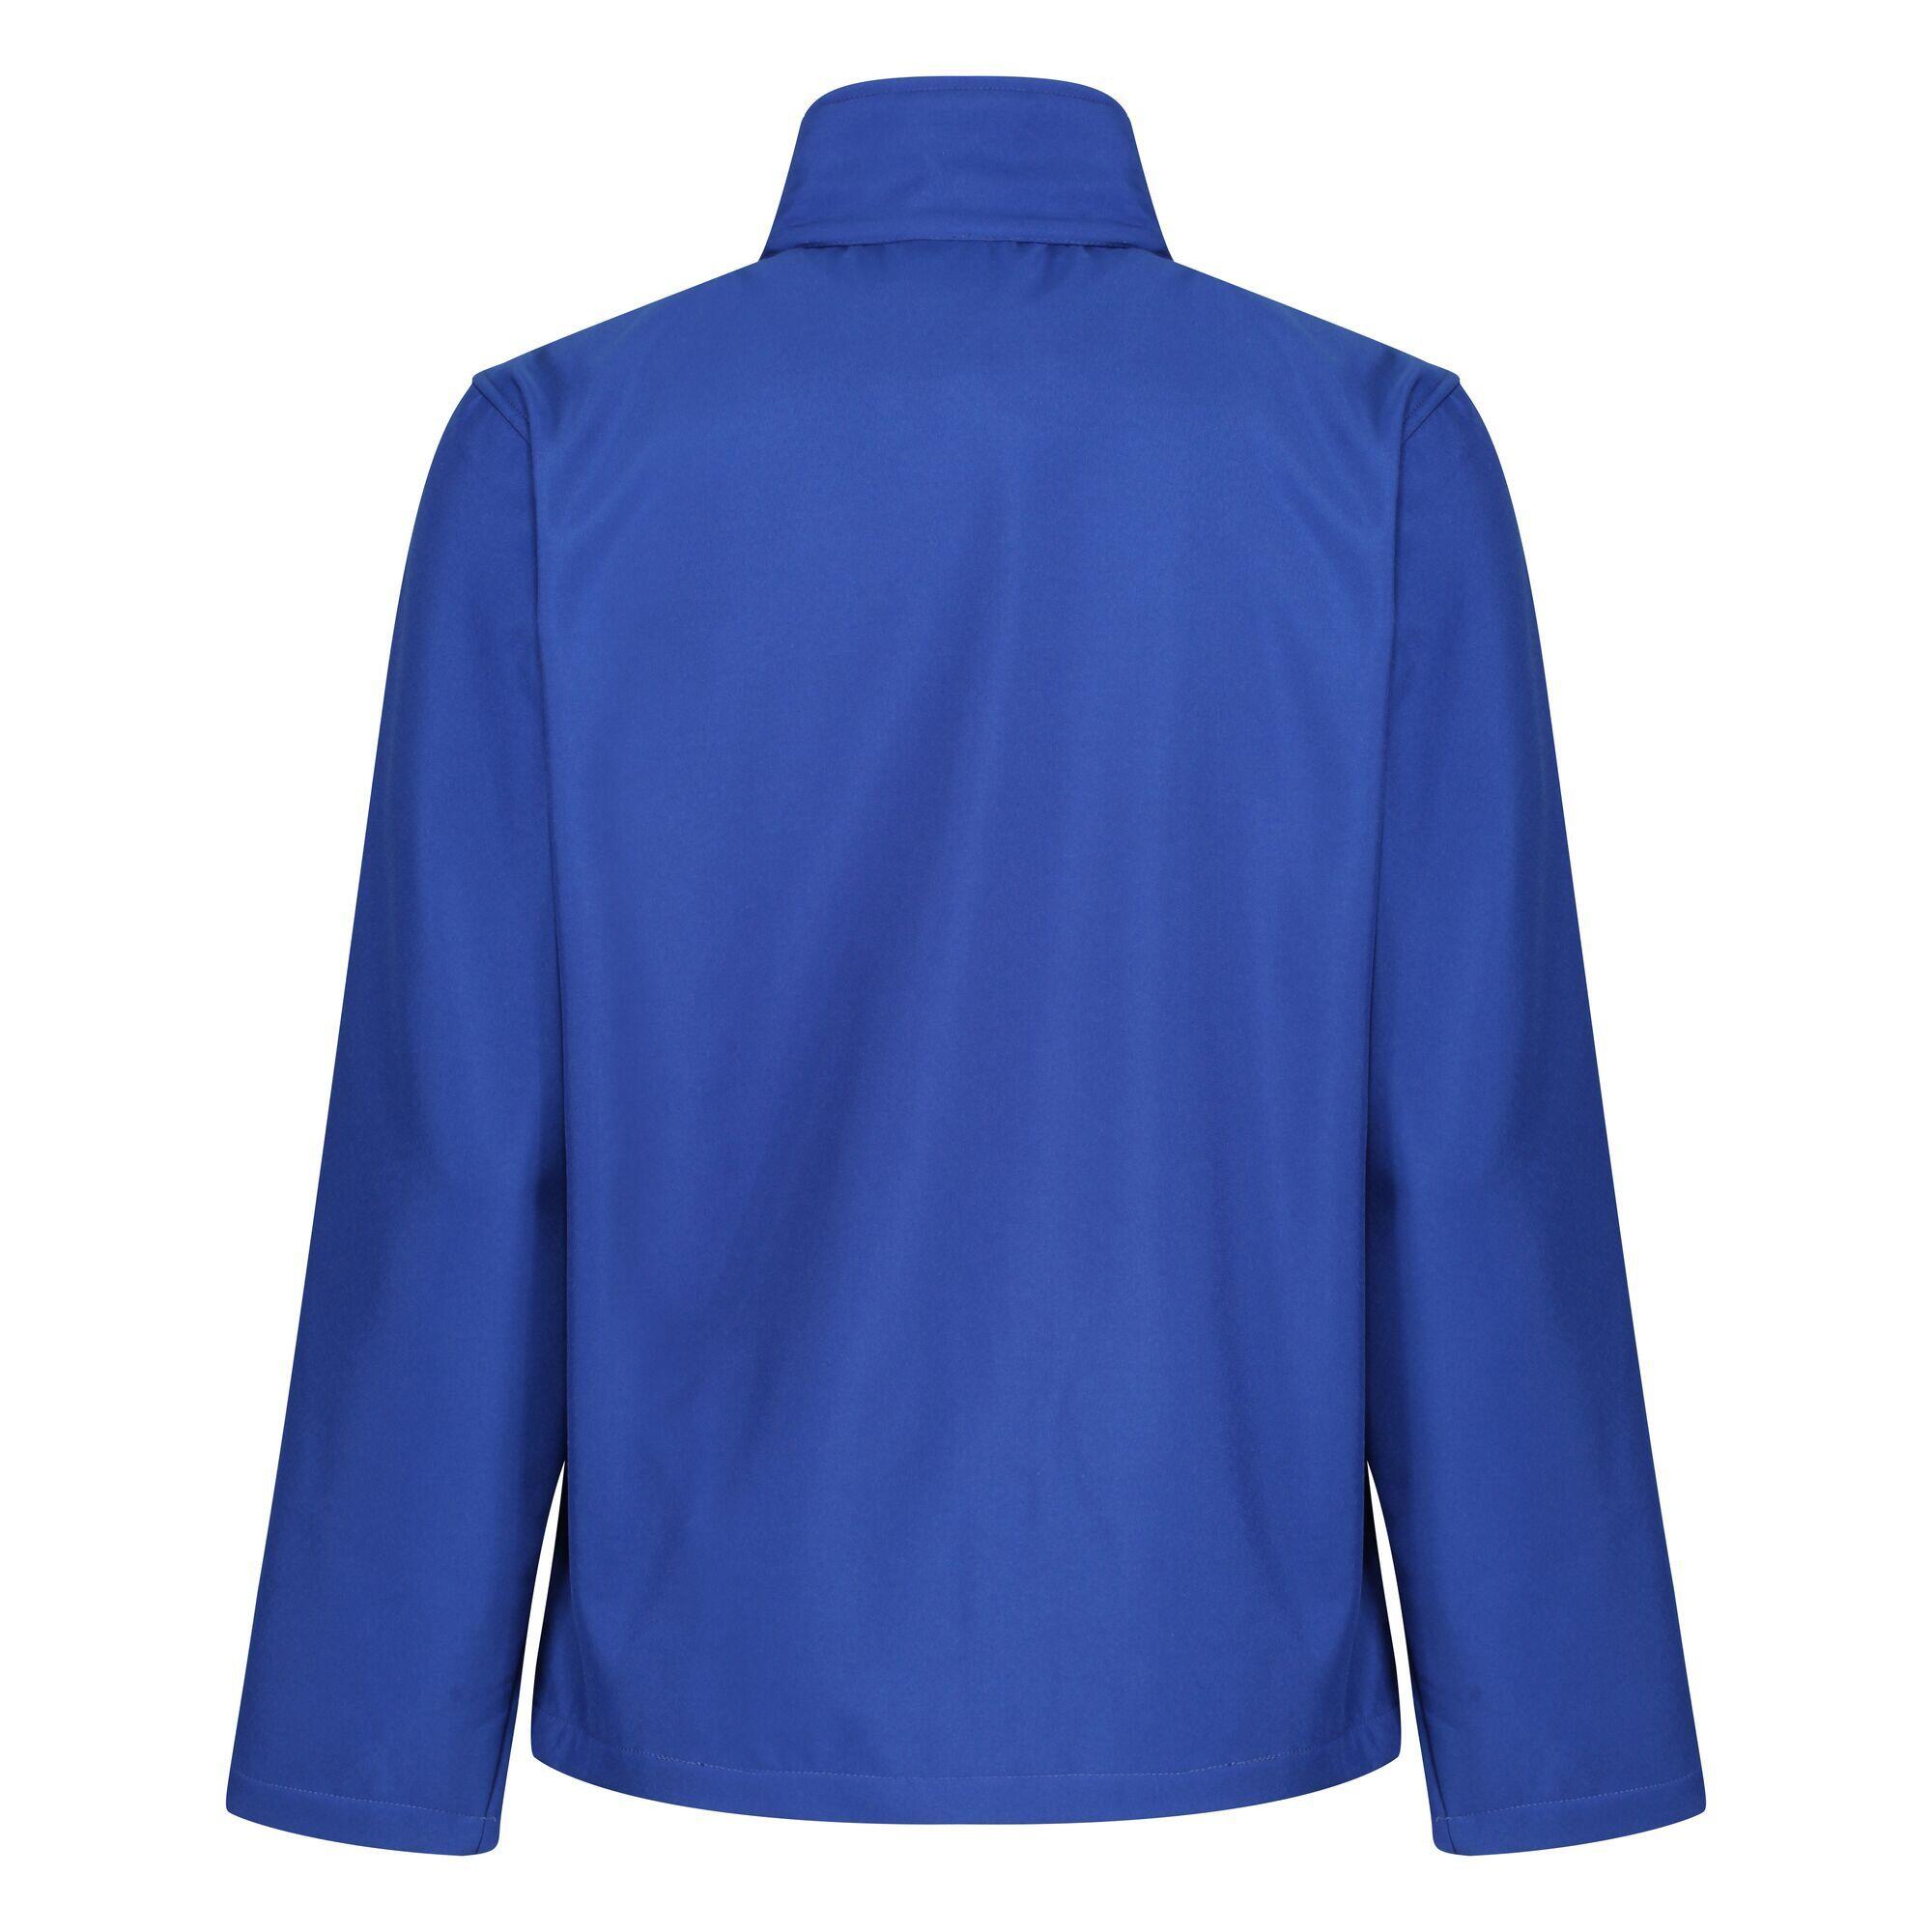 Standout Mens Ablaze Printable Soft Shell Jacket (Royal Blue/Black) 2/5